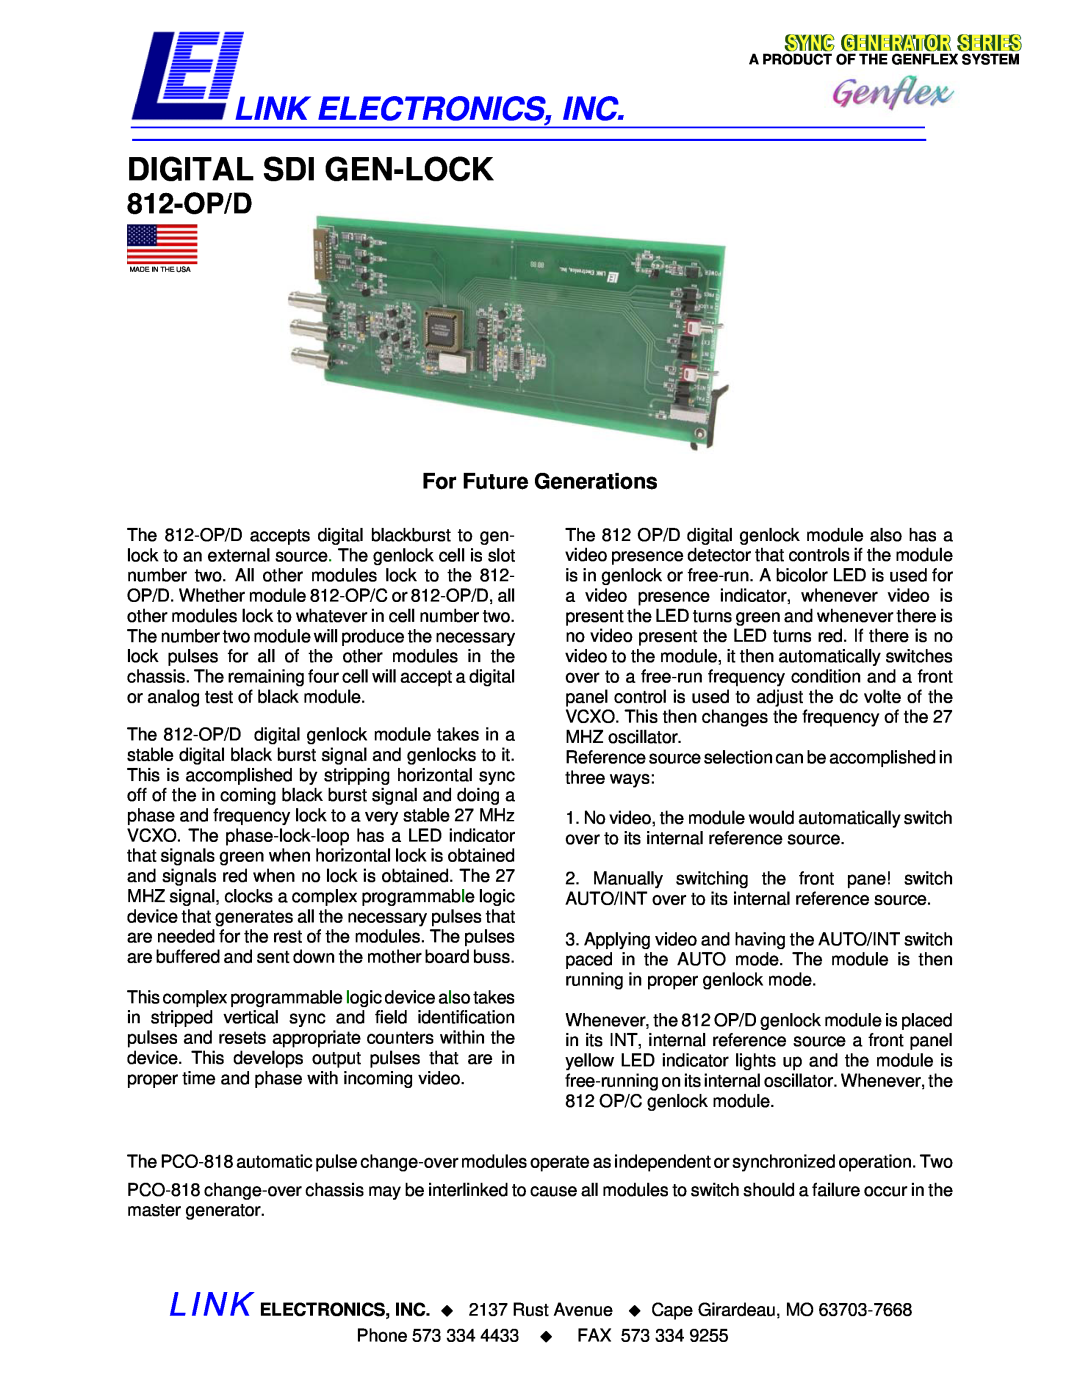 Link electronic 812-OP/D manual For Future Generations, Link Electronics, Inc, Digital Sdi Gen-Lock 